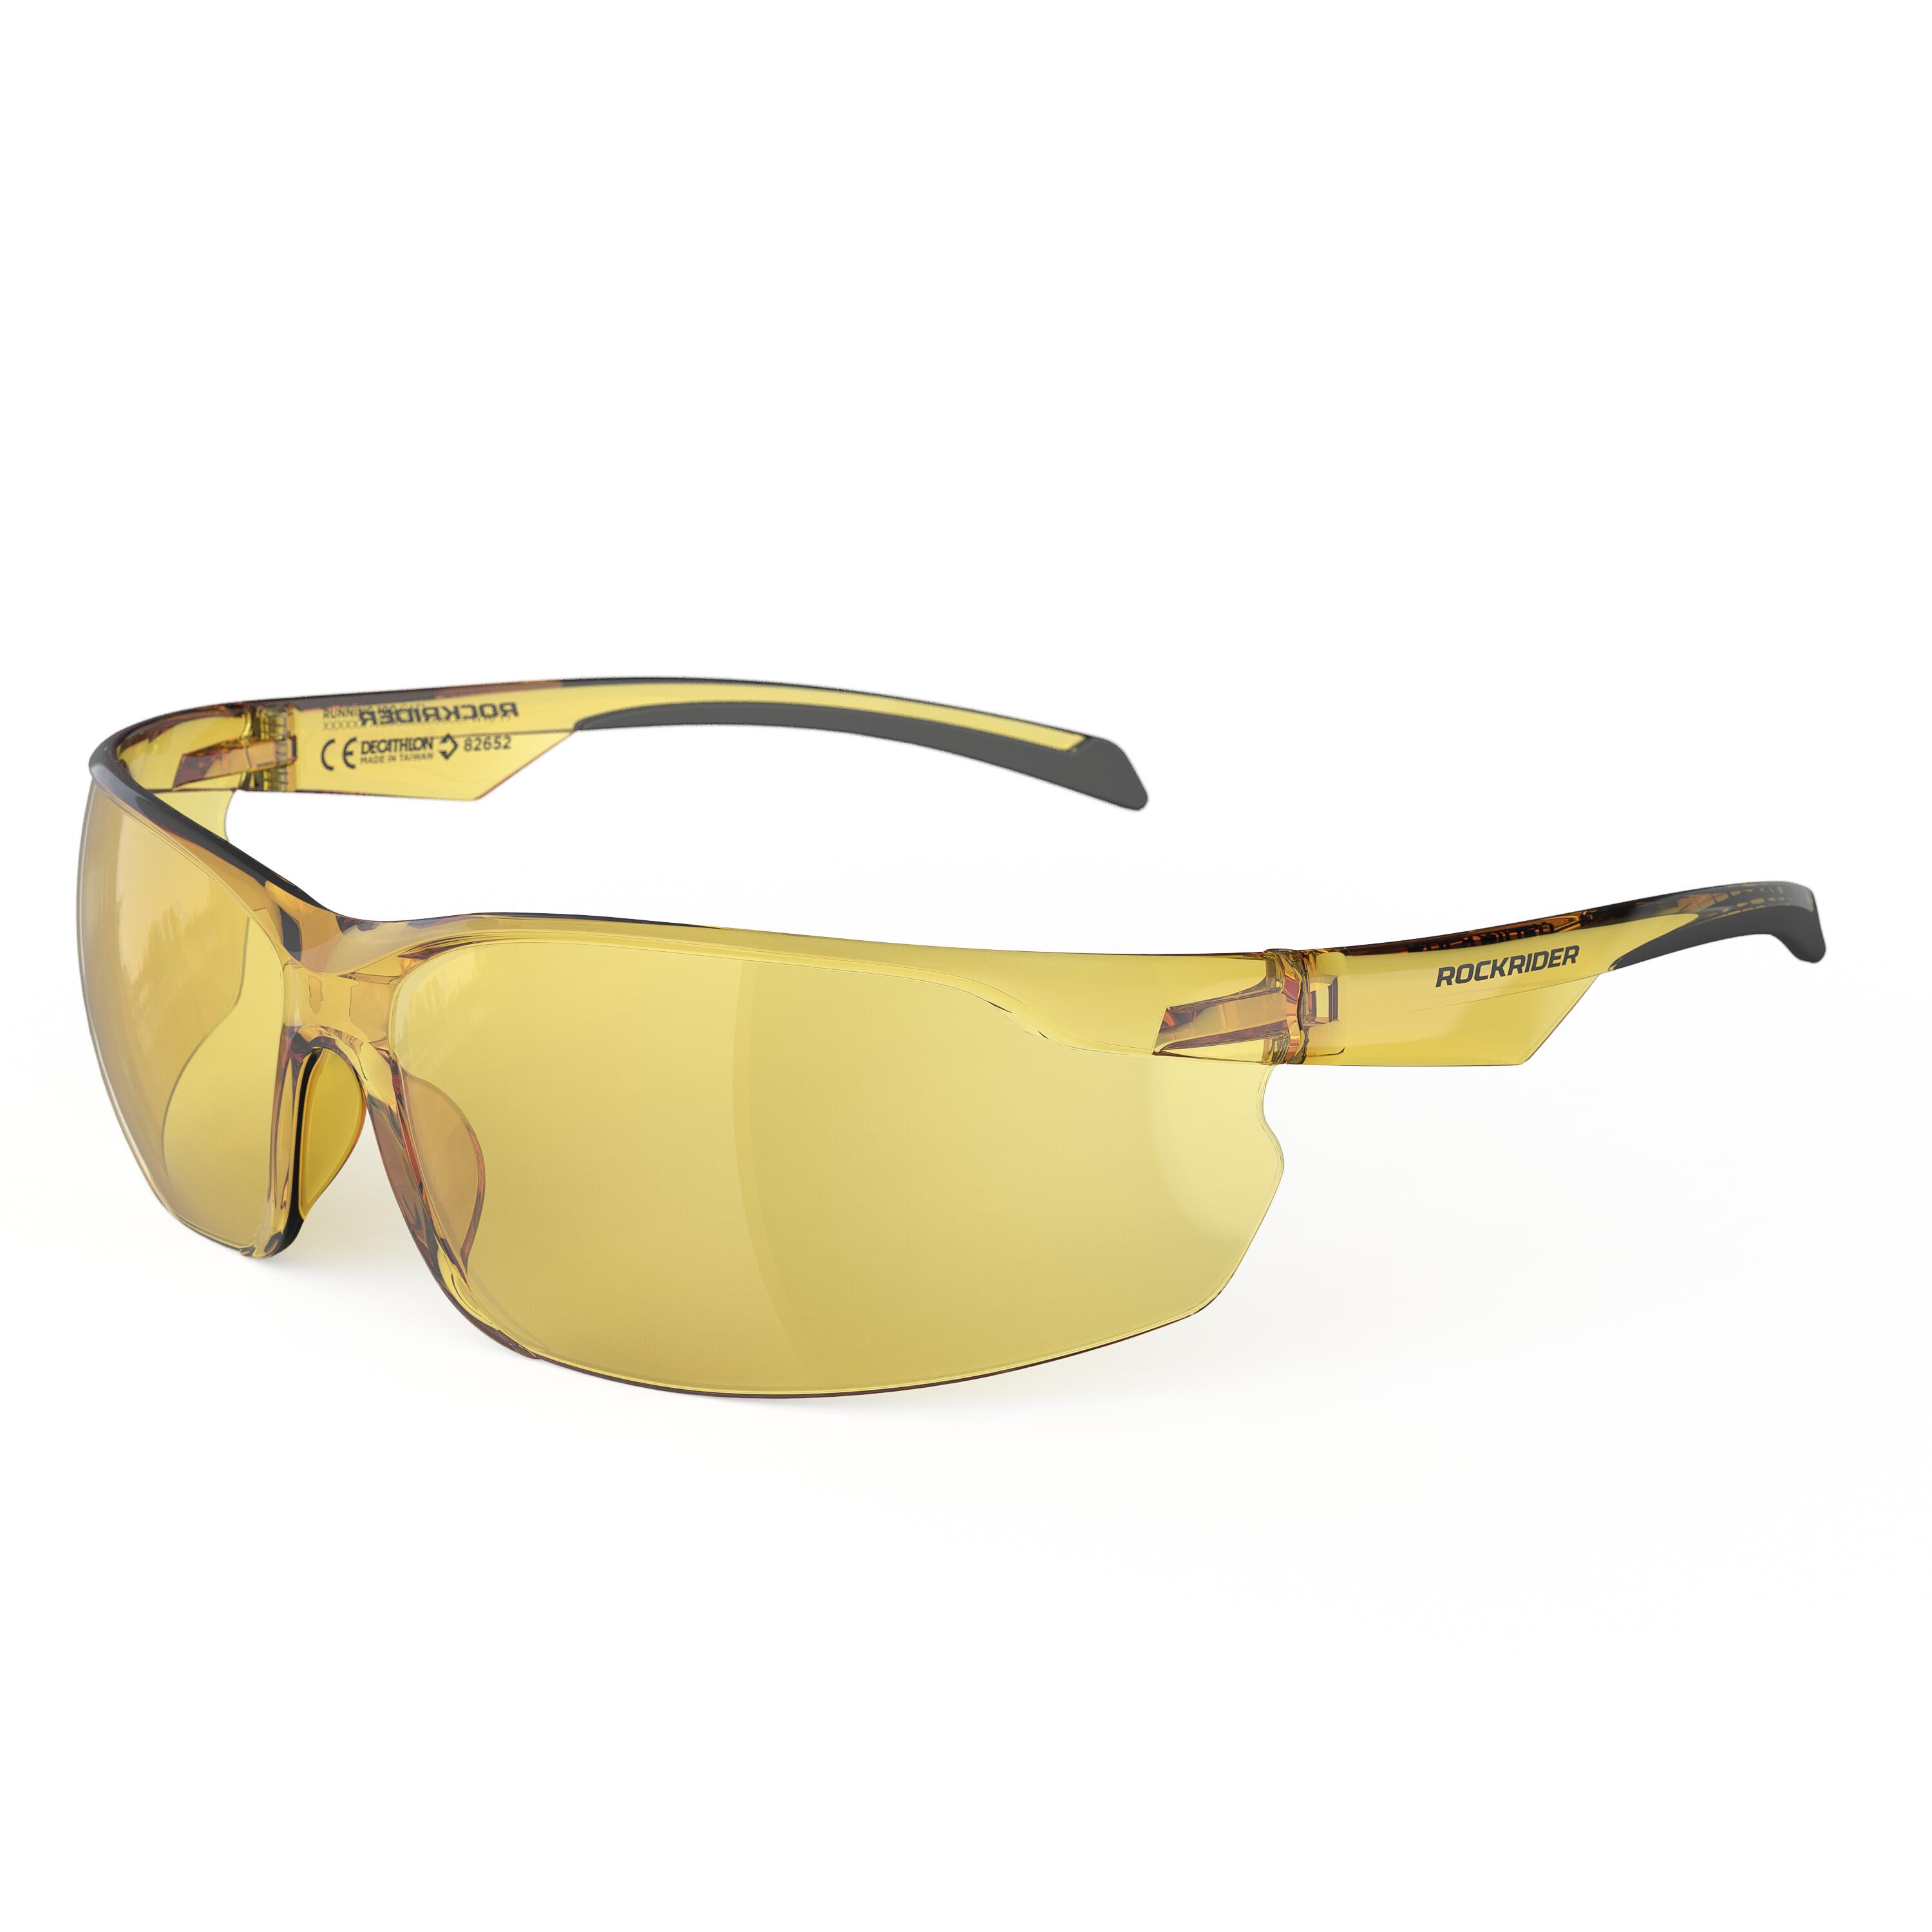 Buy Squash Wide Face Glasses Spg 100 - Size L Online | Decathlon